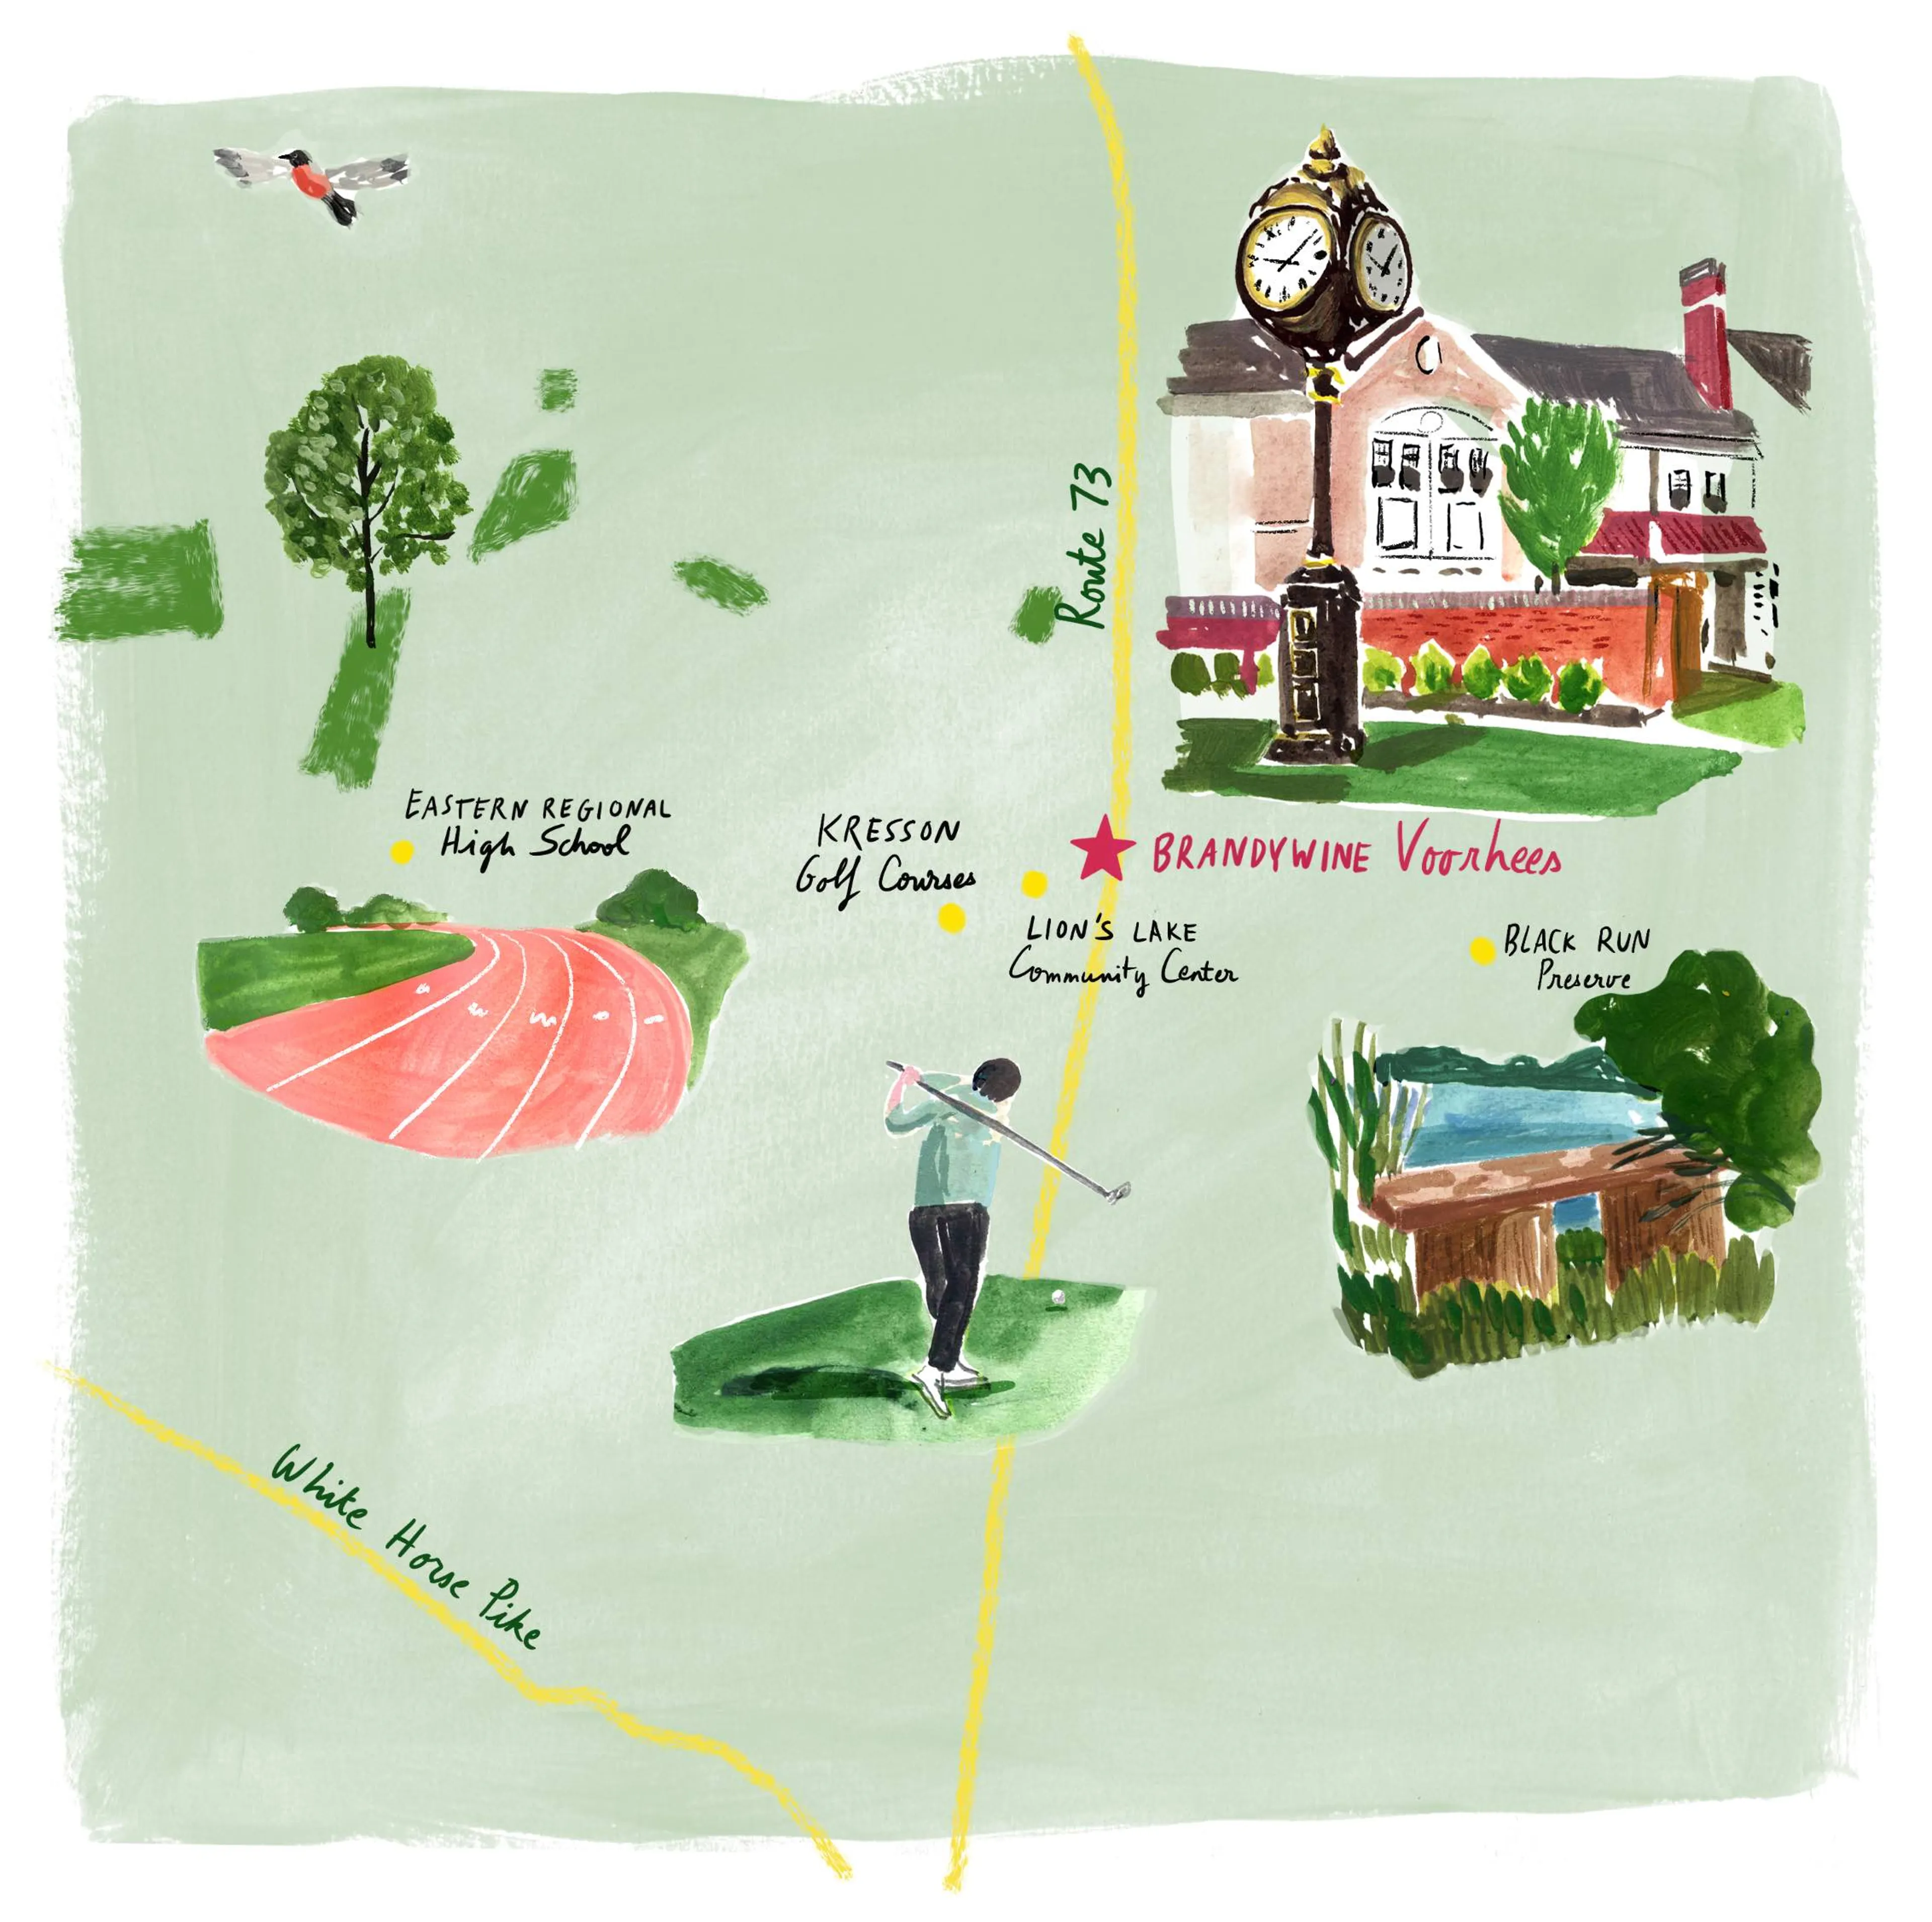 Hand-illustrated map of major roads and landmarks surrounding Brandywine Voorhees in Voorhees Township, NJ